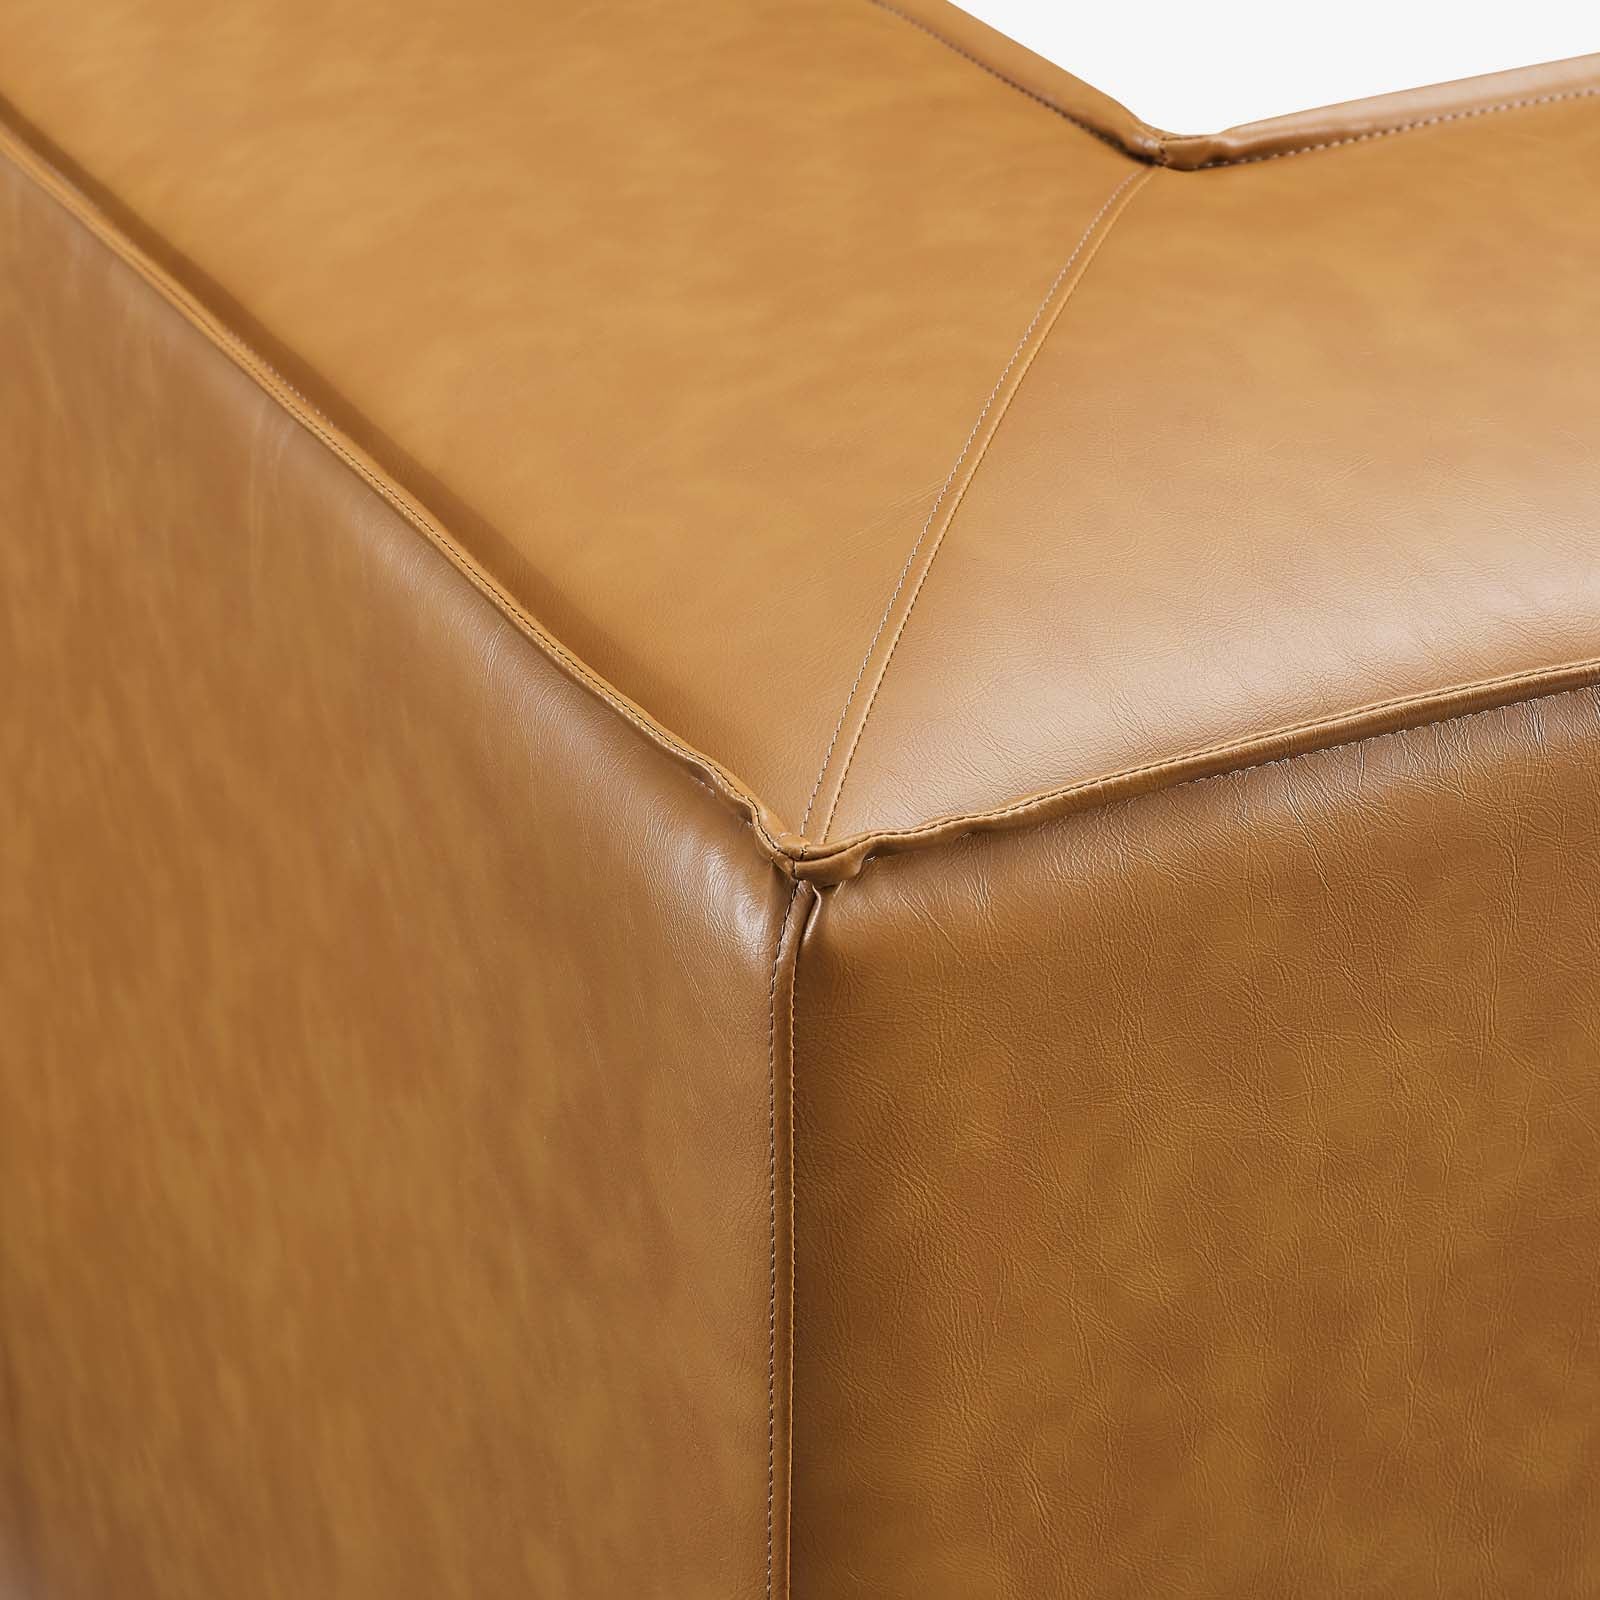 Restore Vegan Leather Sectional Sofa Corner Chair - East Shore Modern Home Furnishings